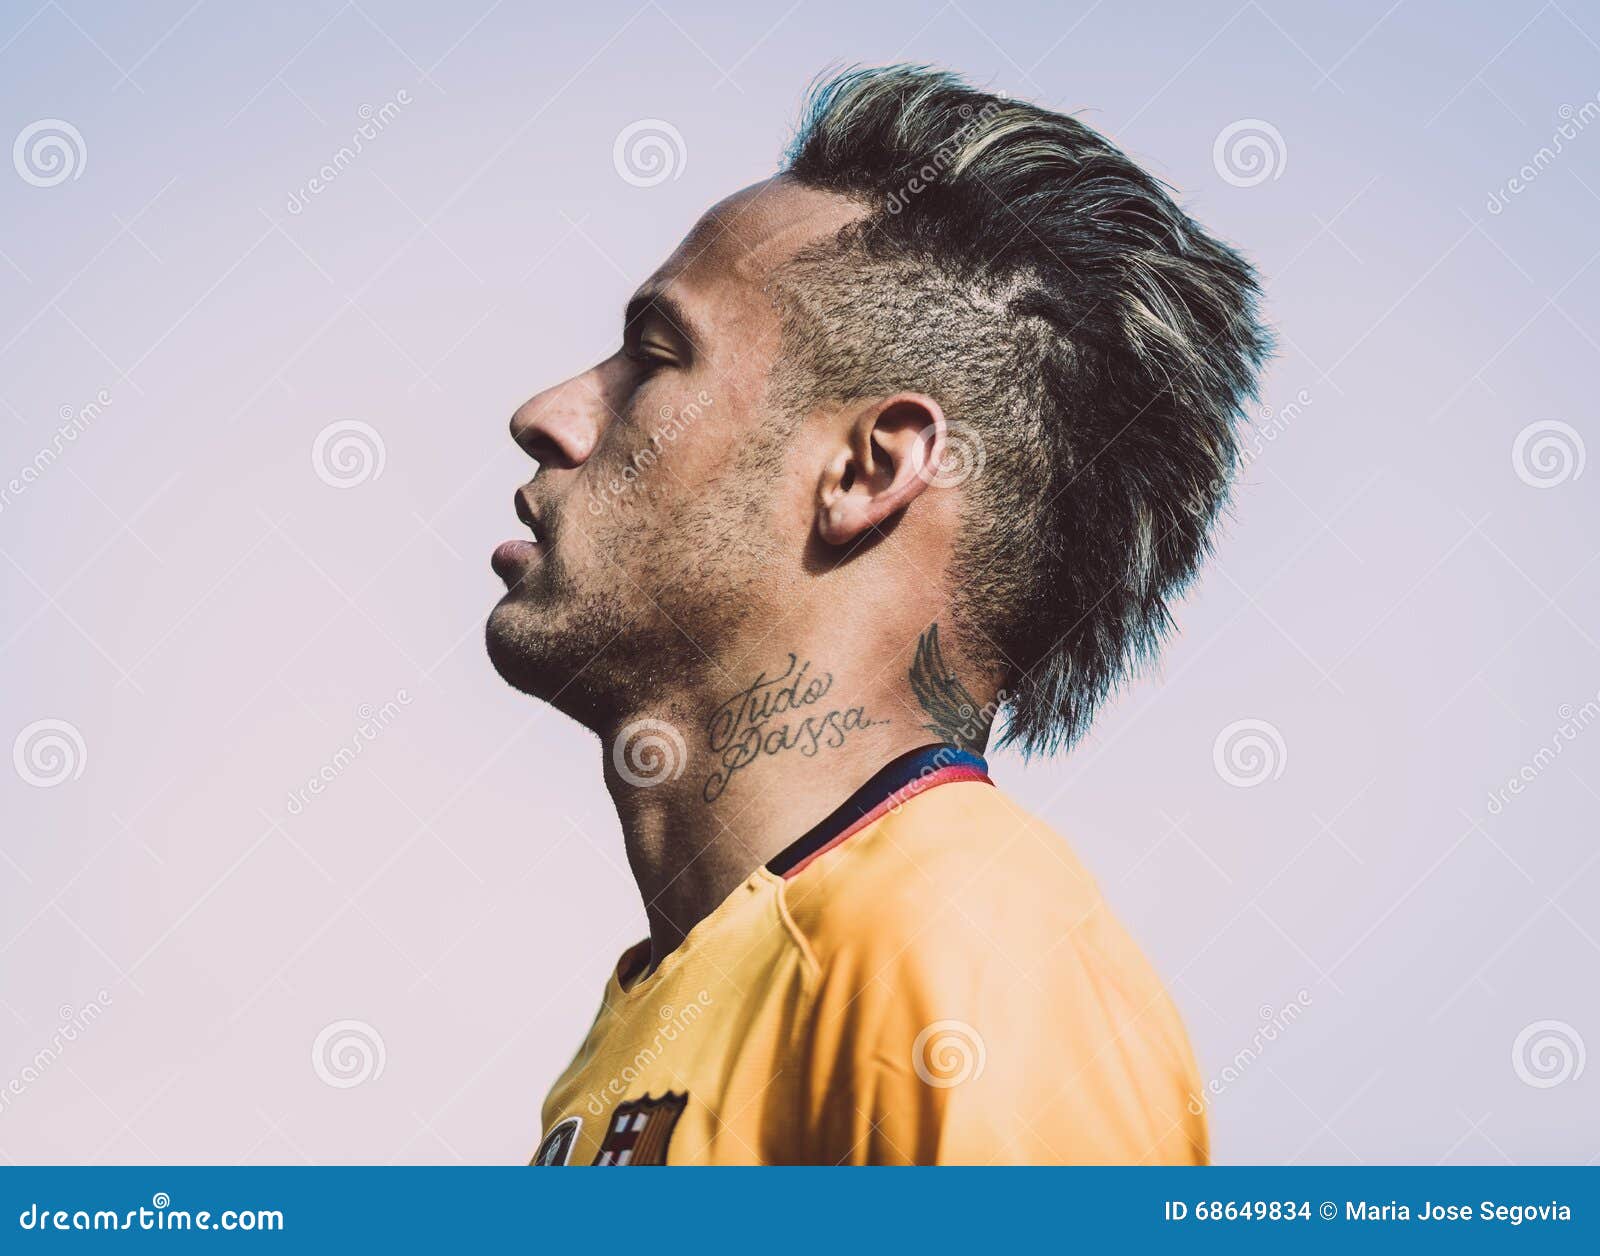 1 023 Neymar Photos Free Royalty Free Stock Photos From Dreamstime